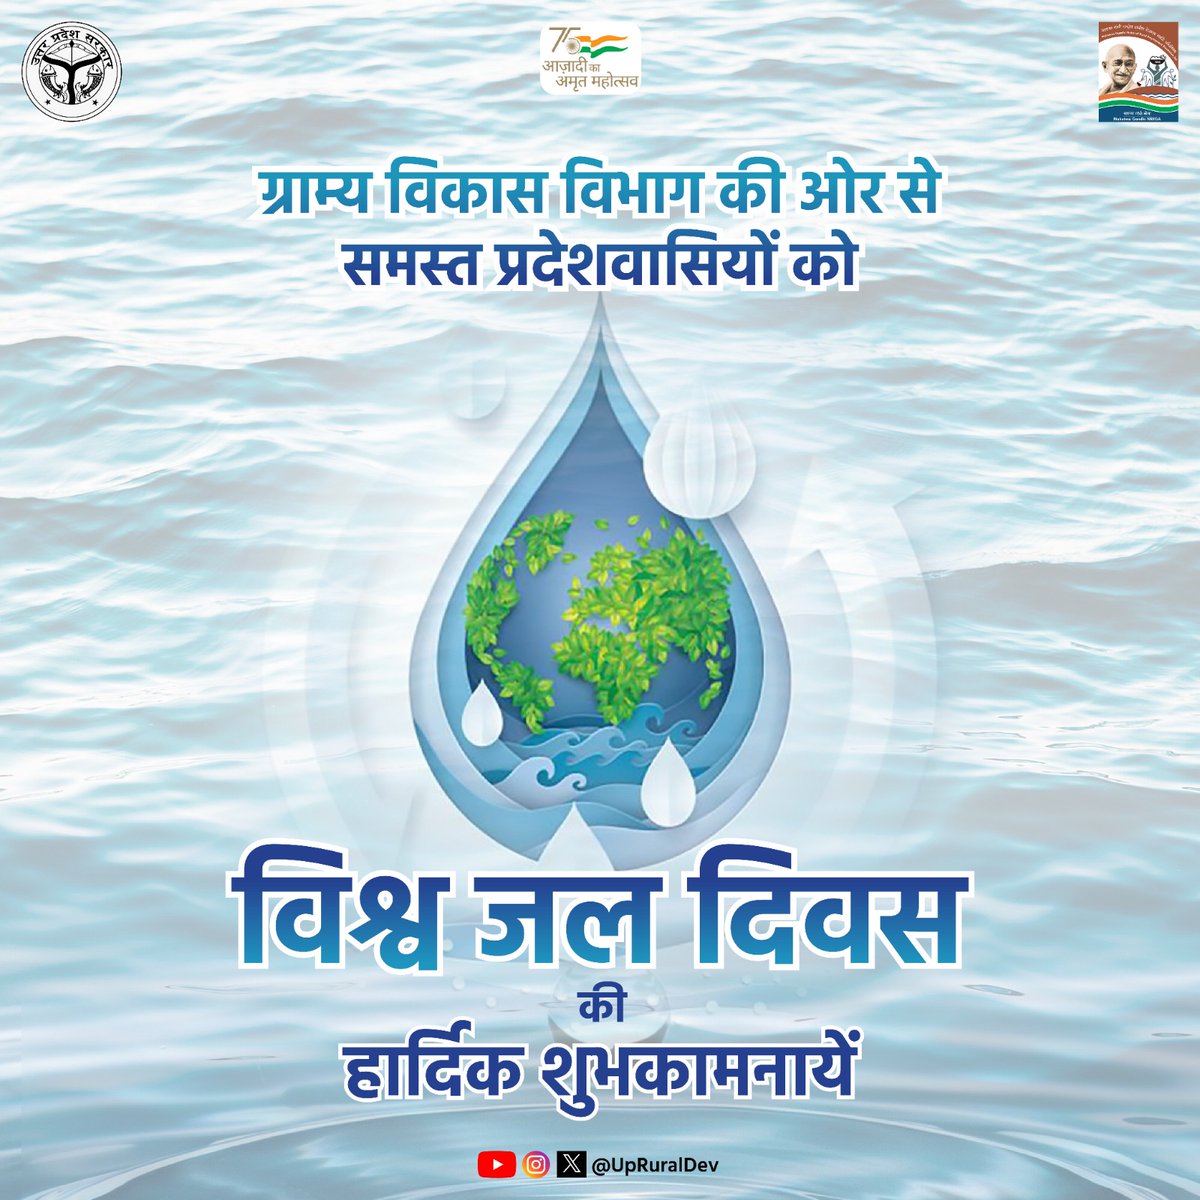 सभी प्रदेश वासियों को 'विश्व जल दिवस' की हार्दिक शुभकामनायें। @kpmaurya1 @VijayLaxmiMLA @MoRD_GoI @UPGovt #WorldWaterDay #developinguttarpradesh #uttarpradesh #ruraldevelopment